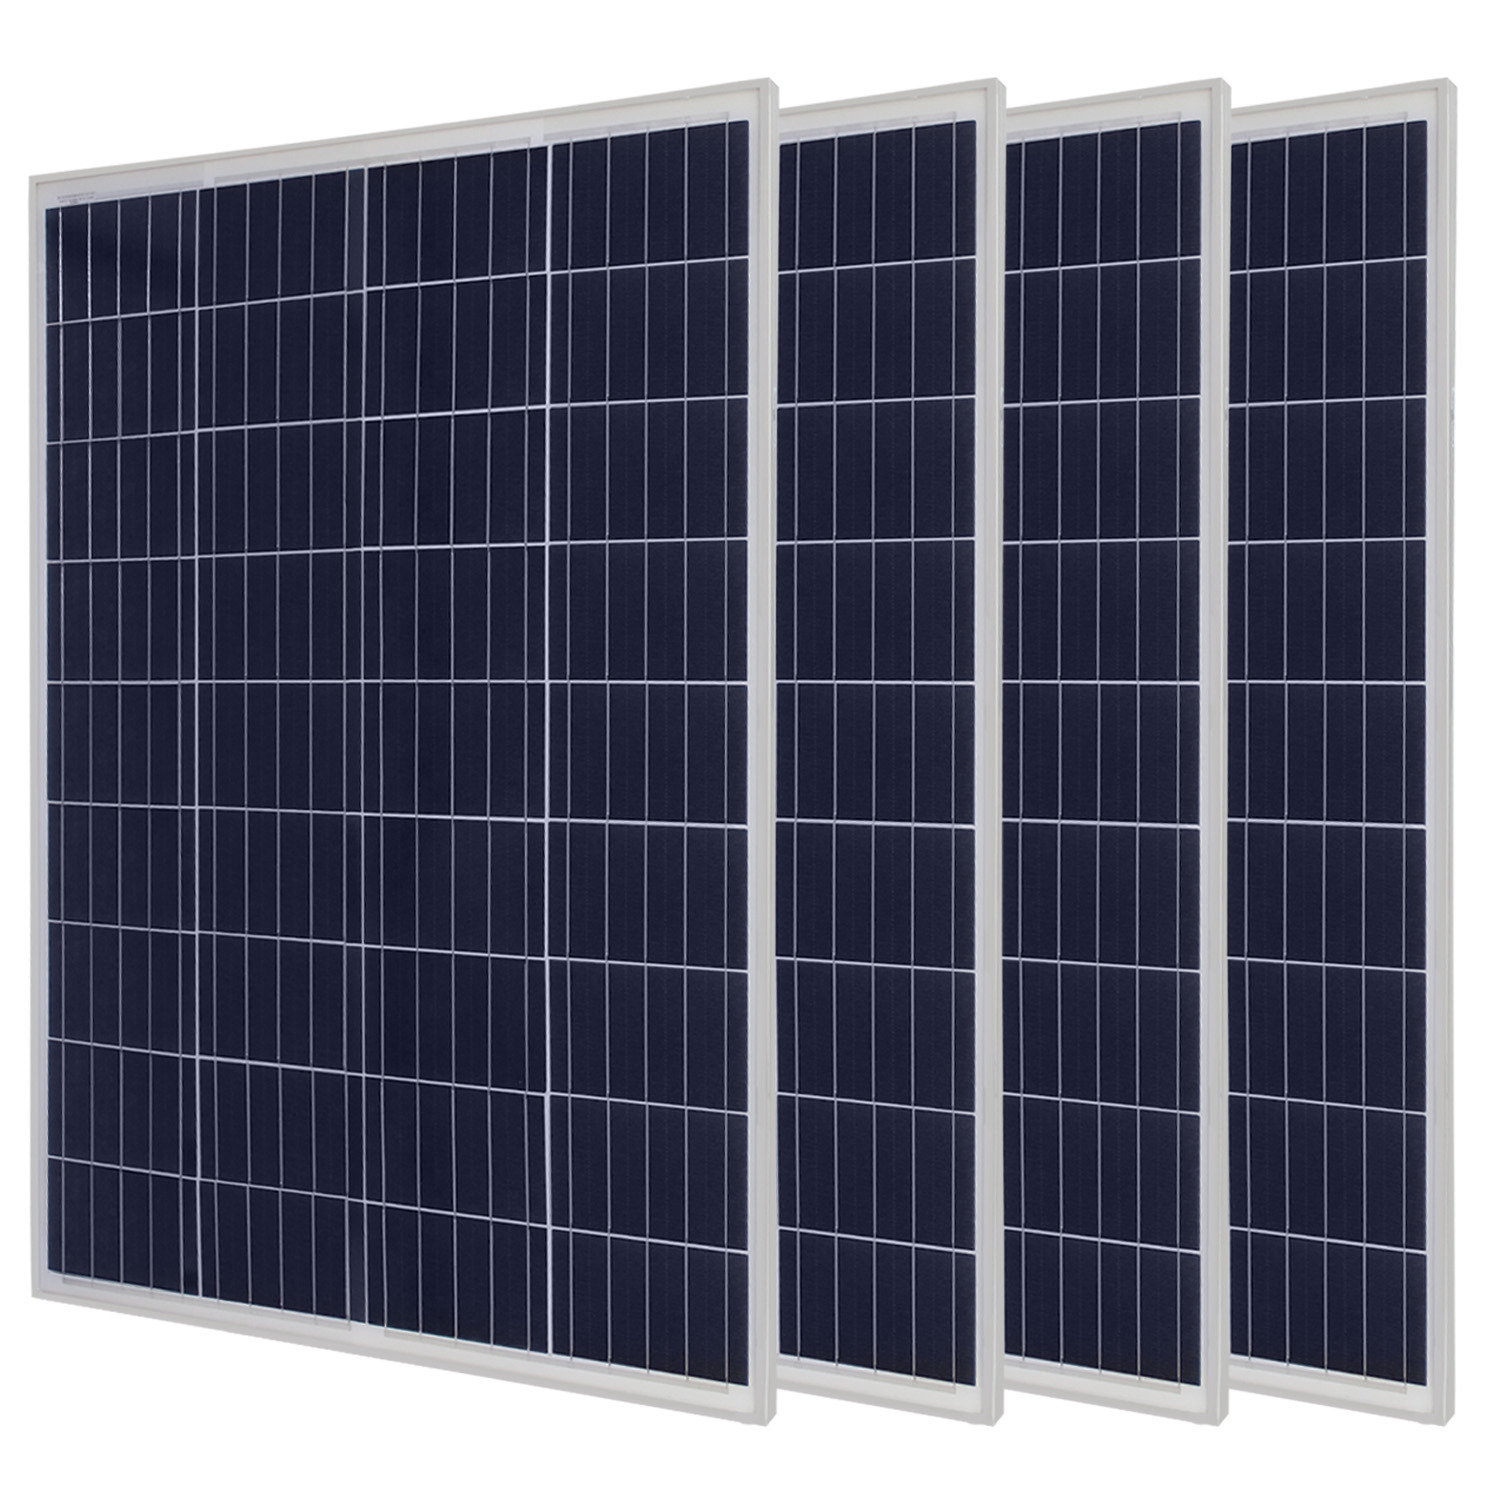 100Watt Solar Panel 12V Poly Battery Charger for Wind Turbine Generator - 4 Pack